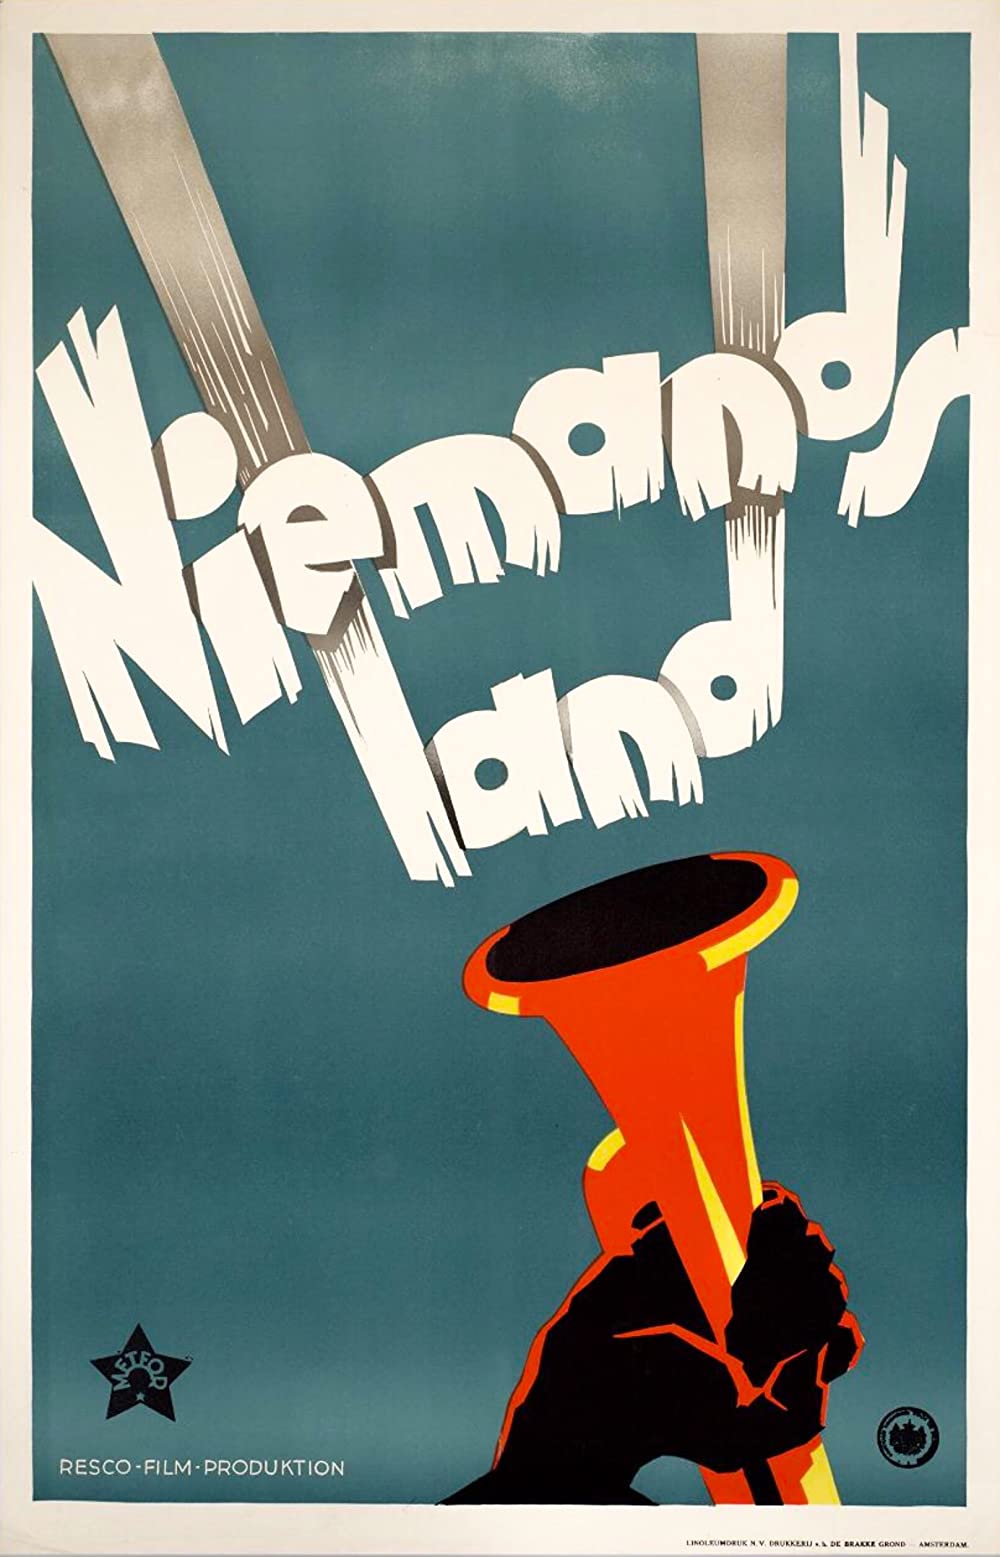 Filmbeschreibung zu Niemandsland (1931)